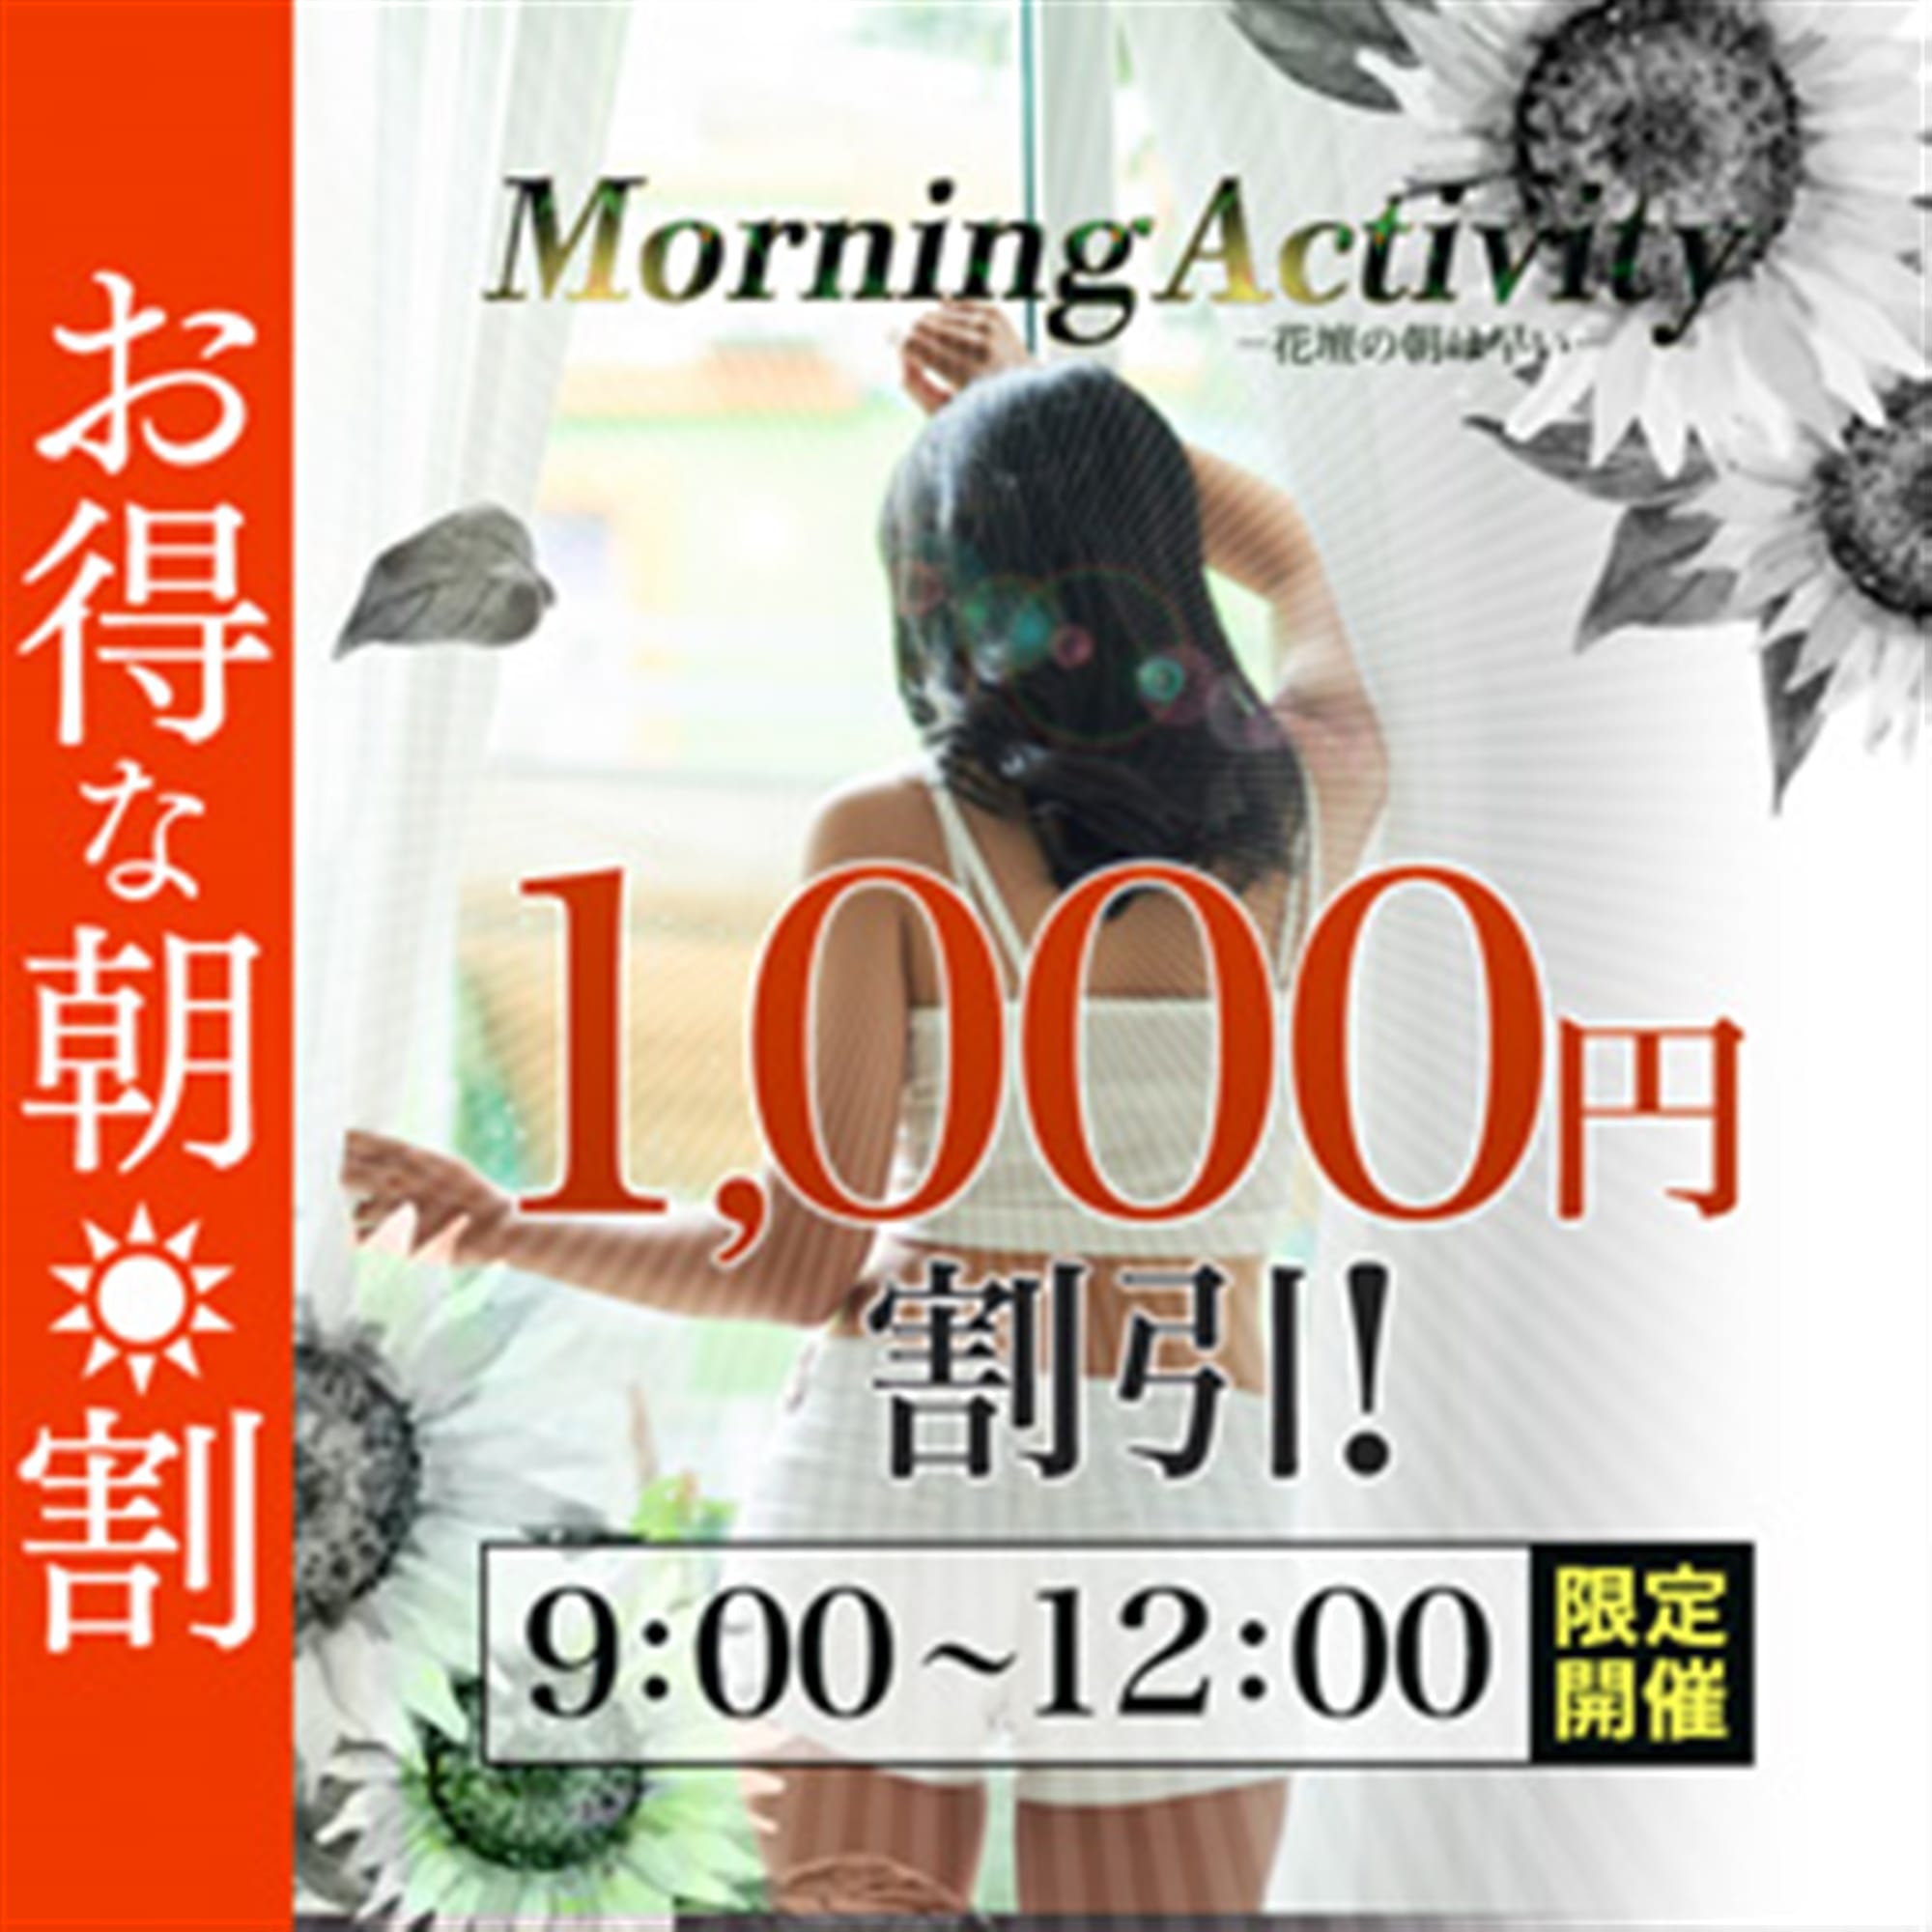 「Morning Activity」03/28(木) 19:59 | 木更津人妻花壇のお得なニュース